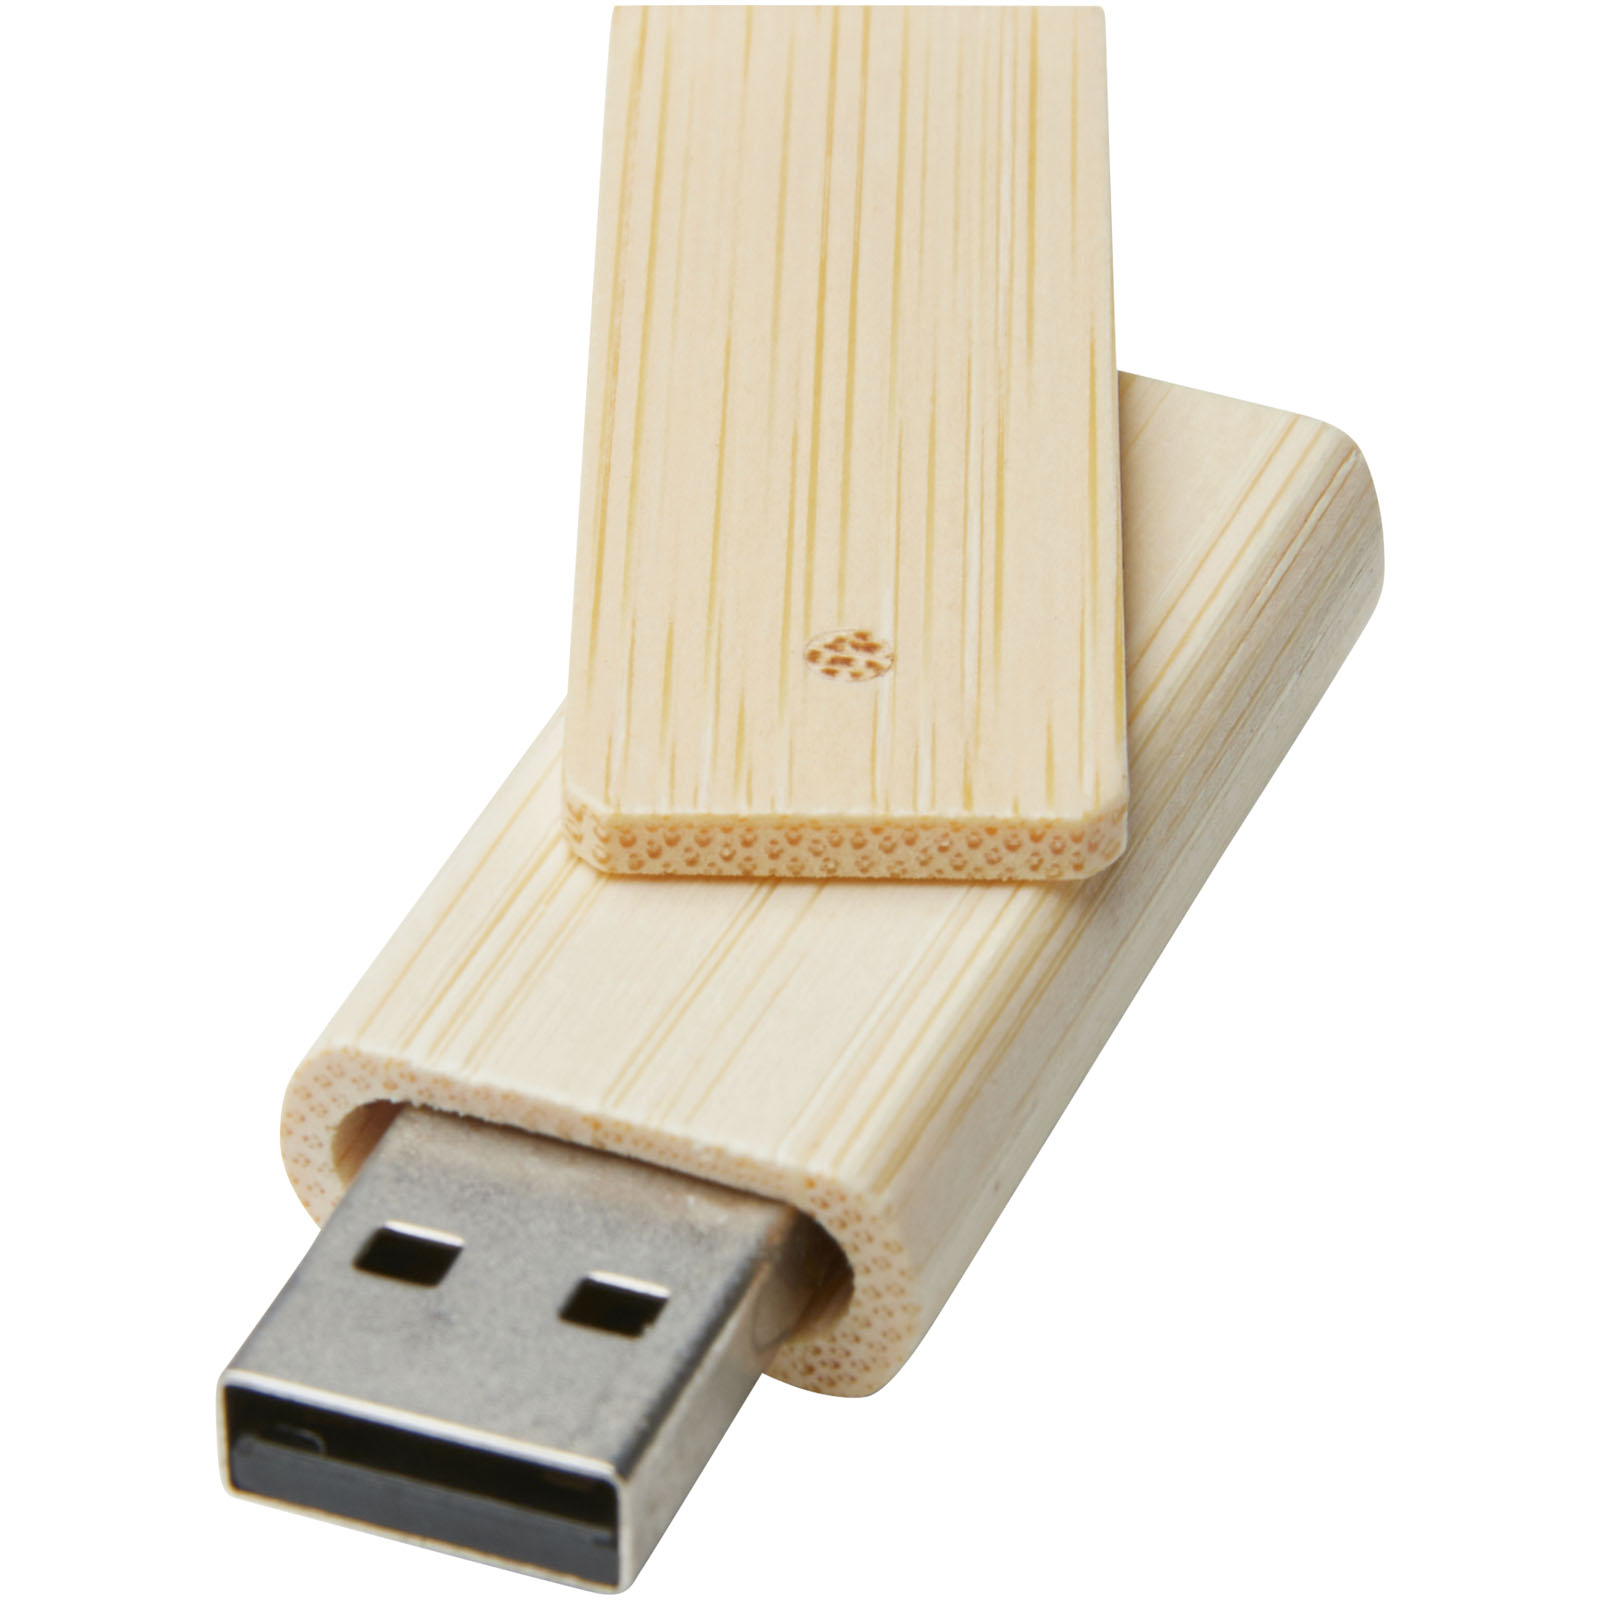 USB Flash Drives - Rotate 4GB bamboo USB flash drive